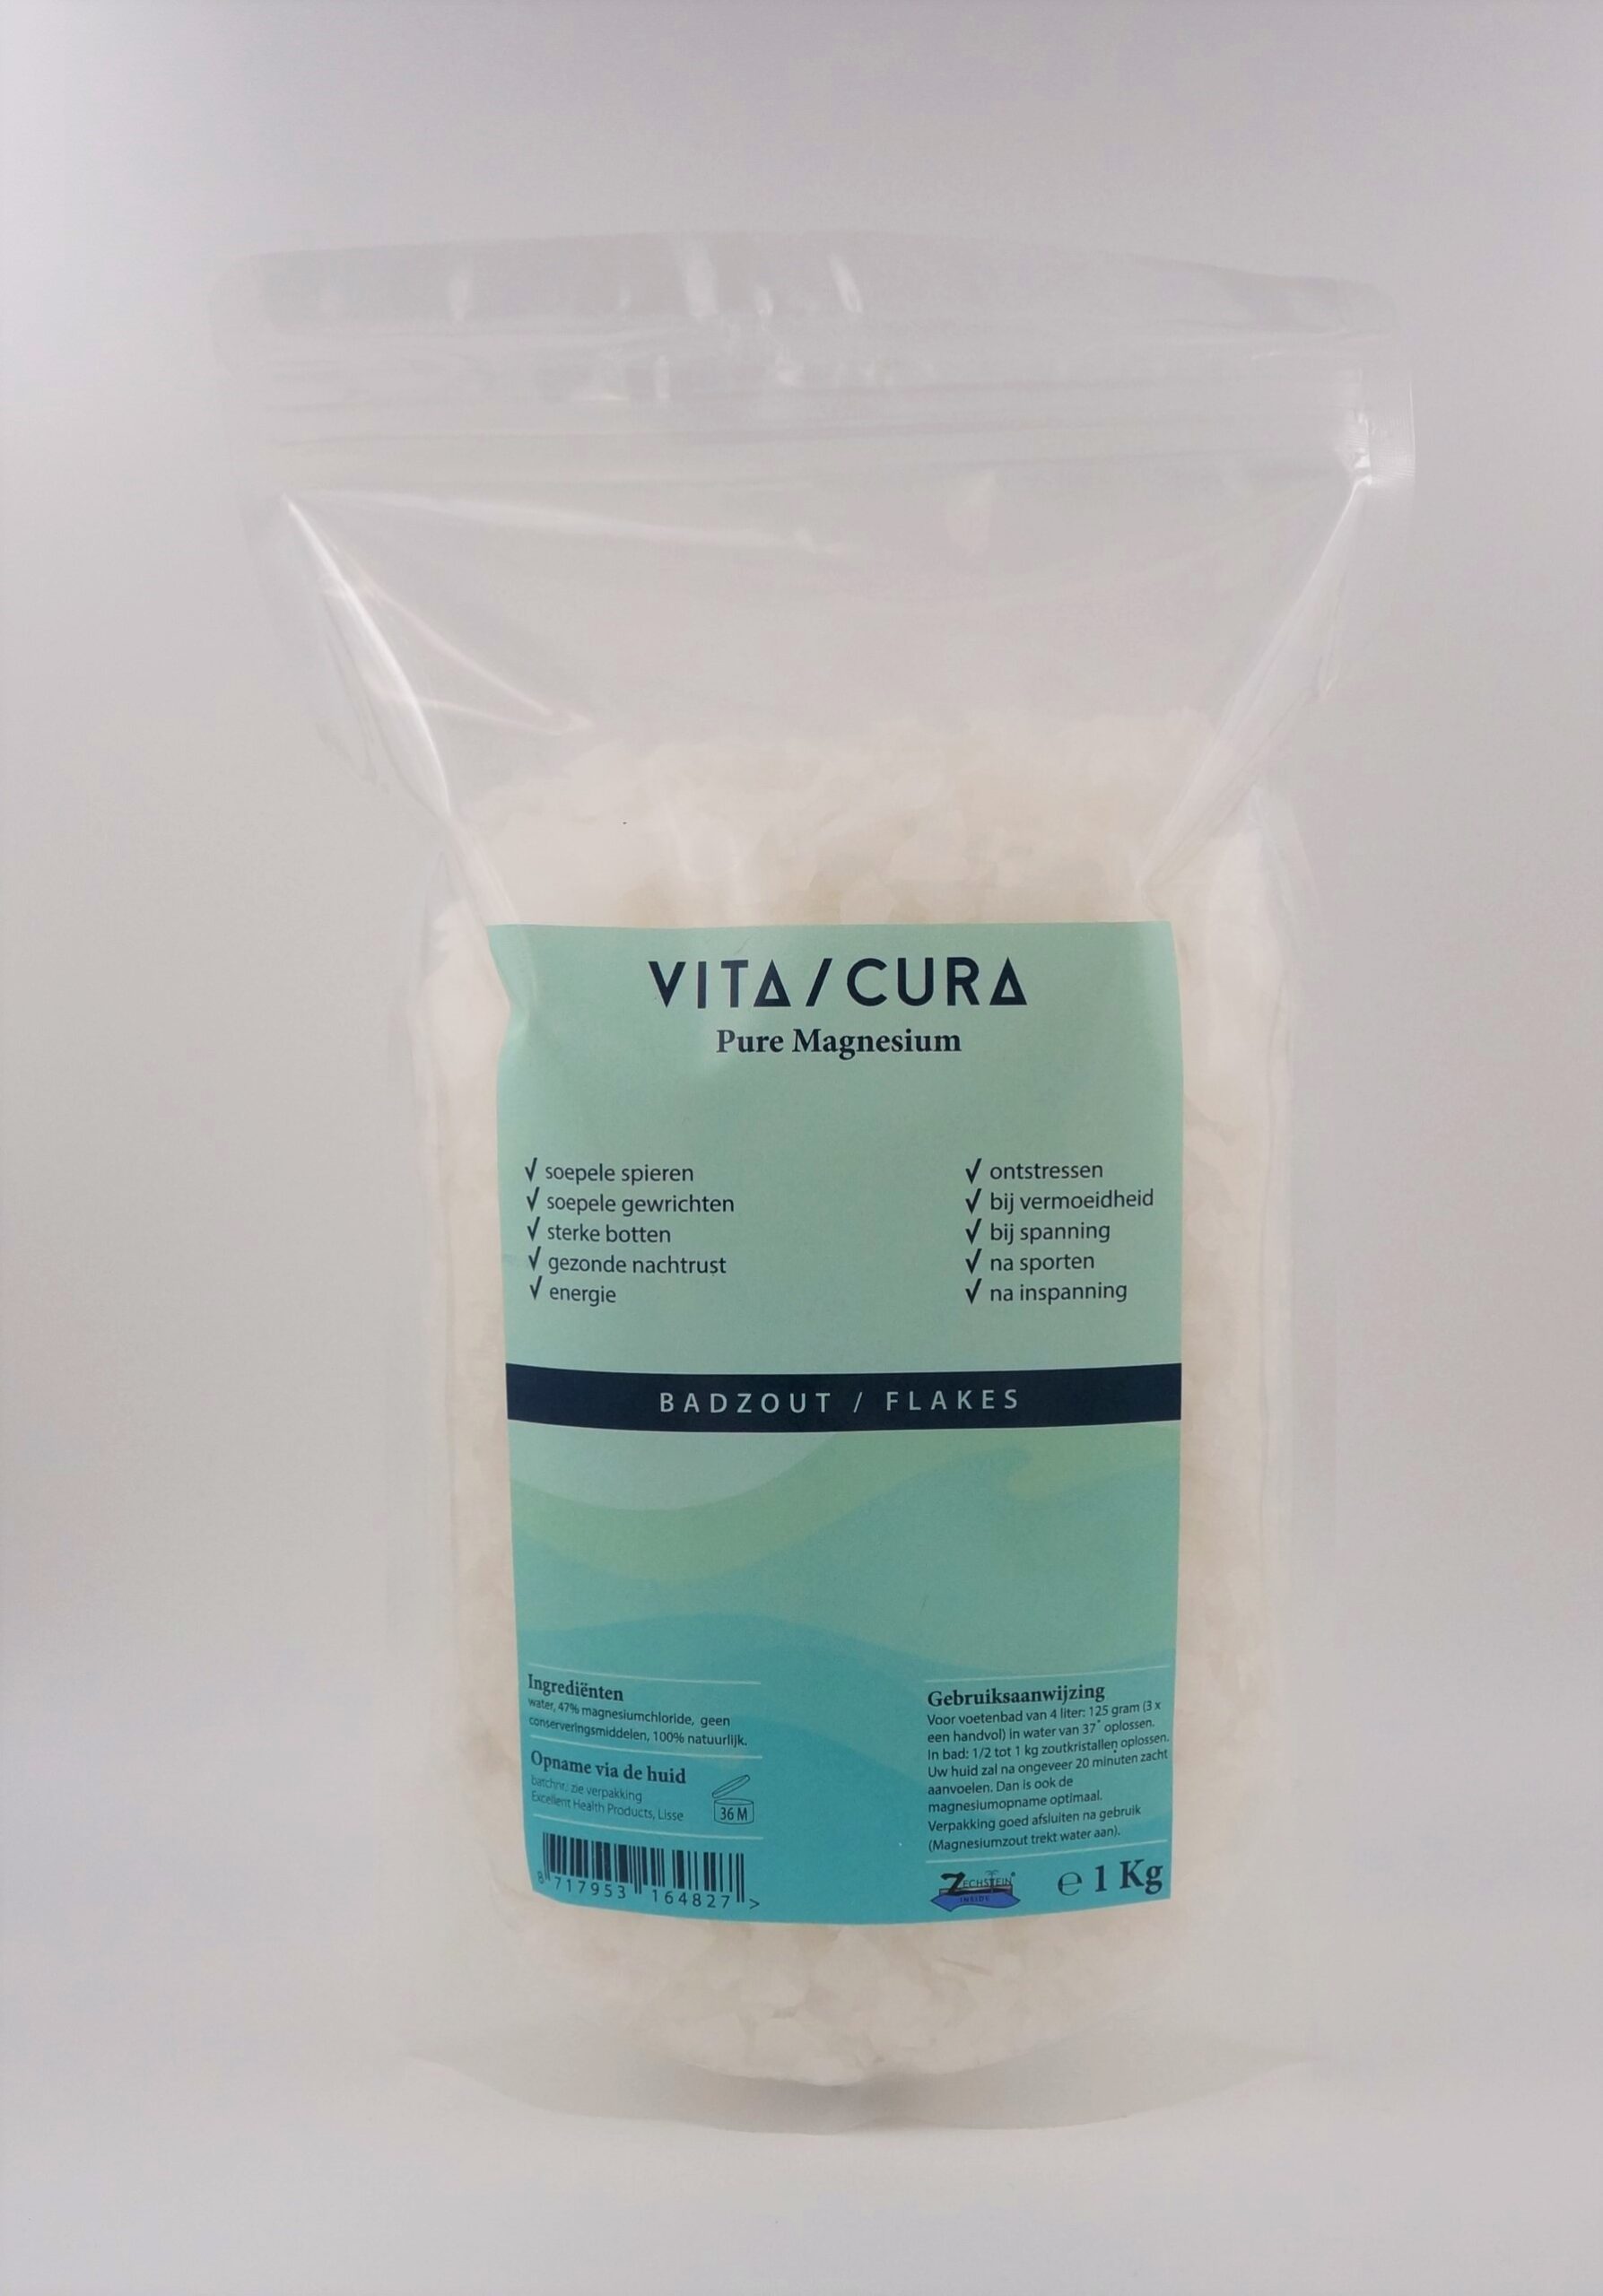 compenseren ontwikkelen ga verder Magnesium zout/flakes 1kg - Vitacura